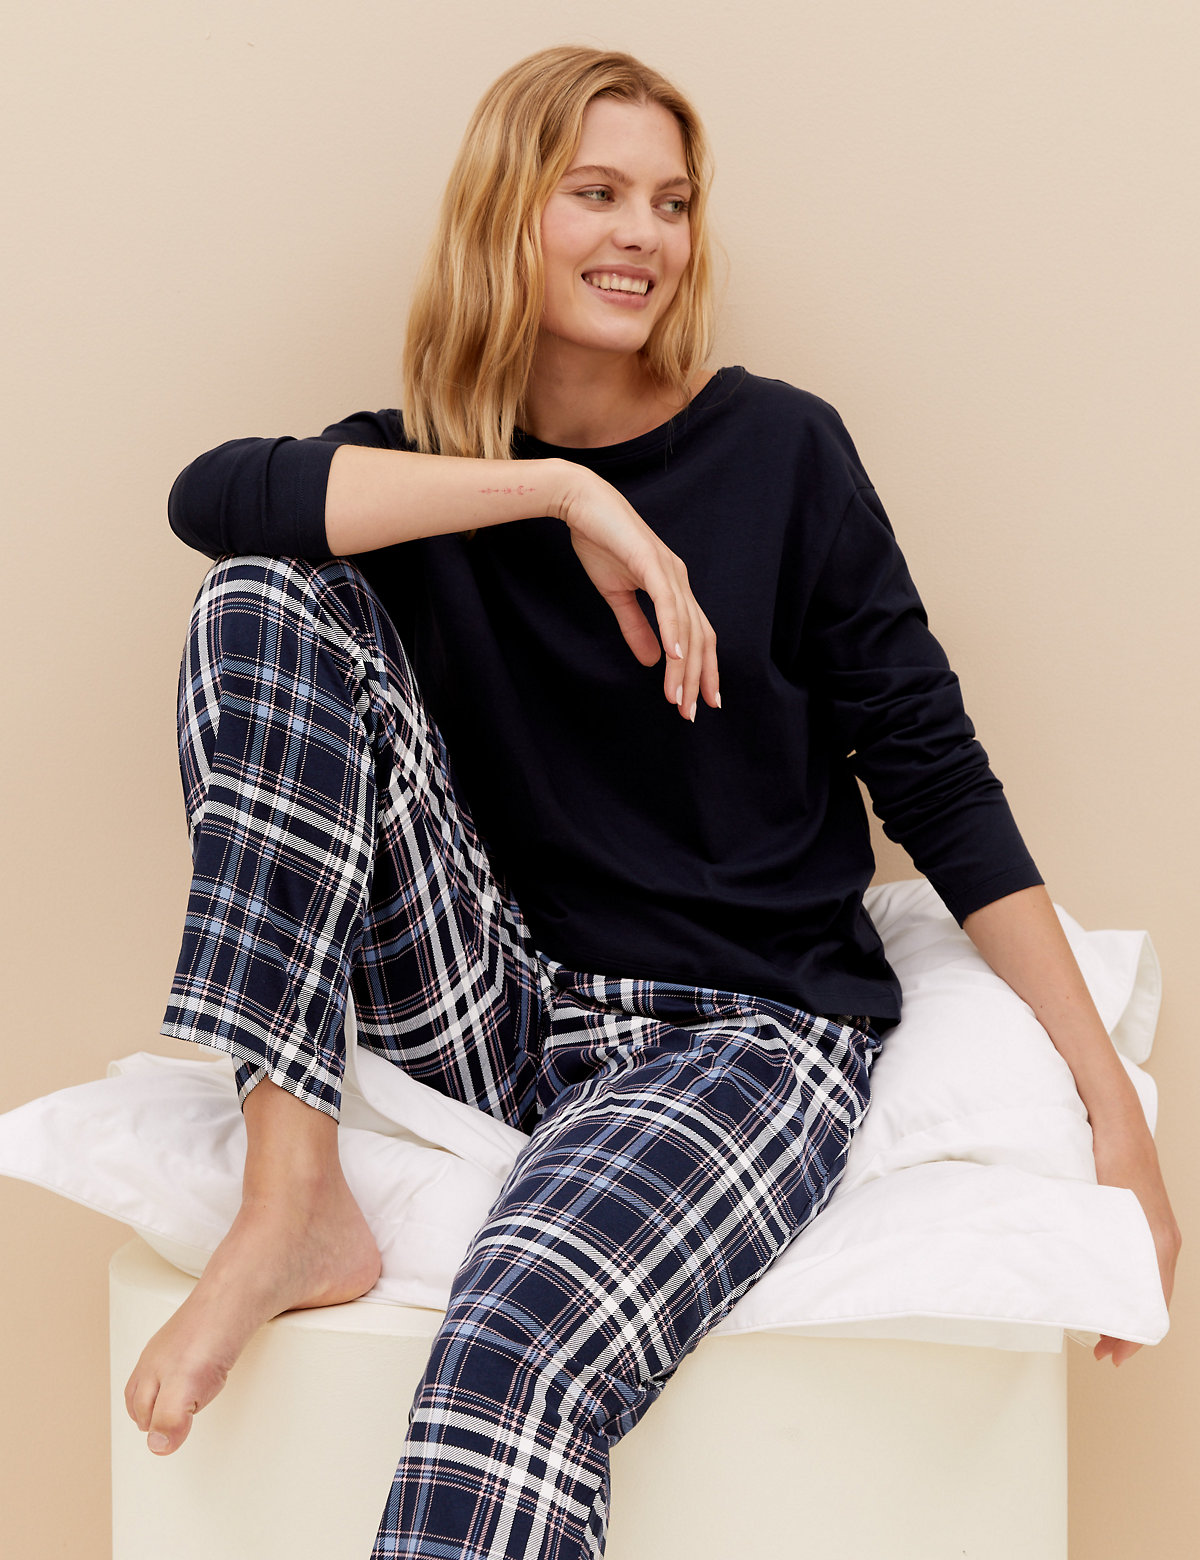 Pure Cotton Check Pyjama Set